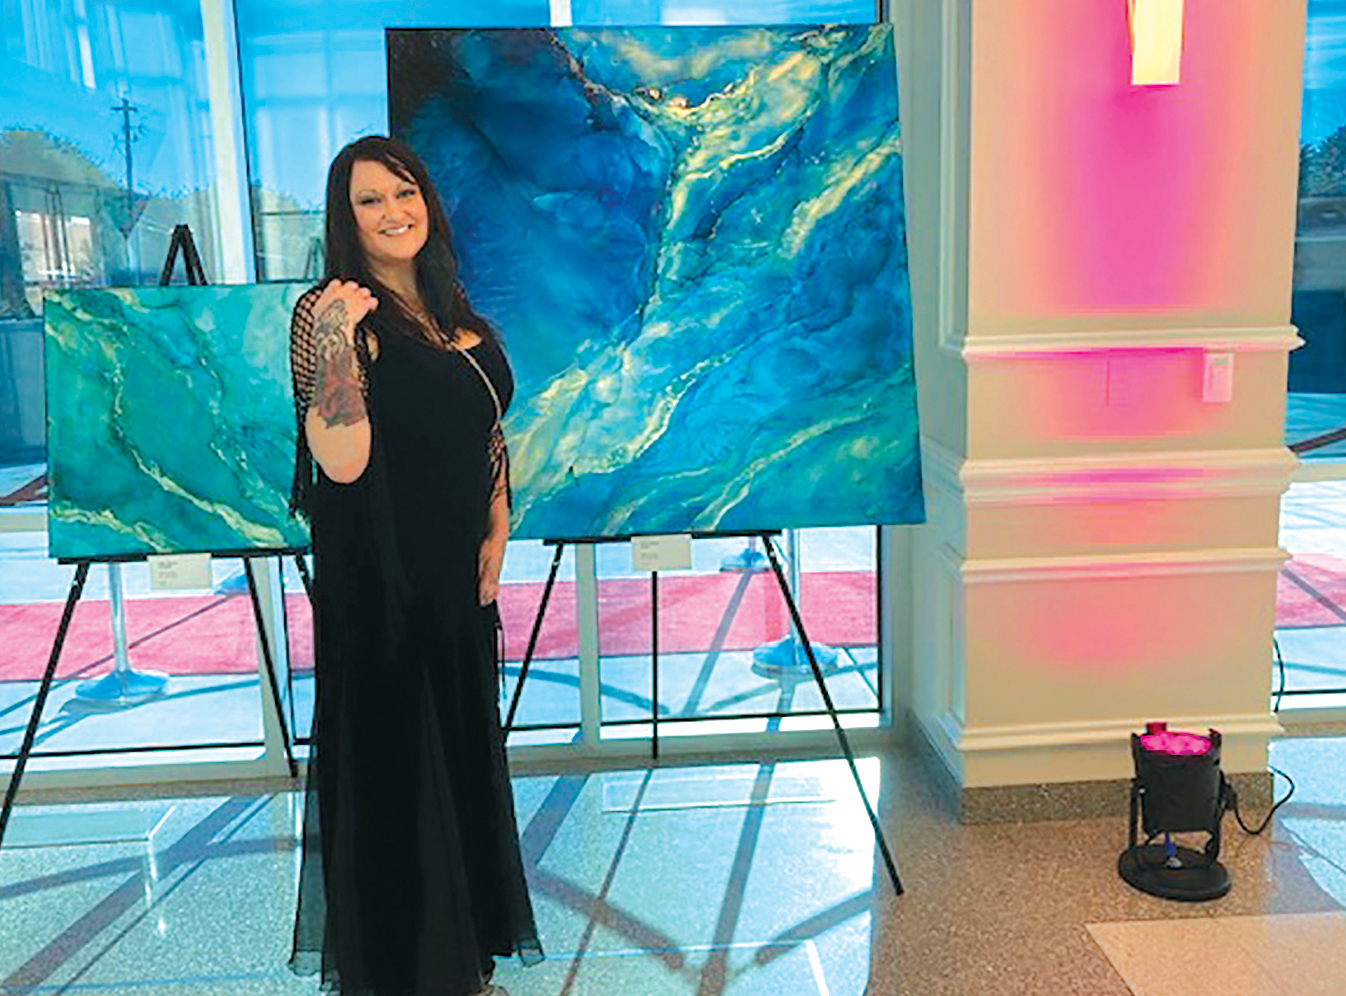 Gallery brightens art center lobby